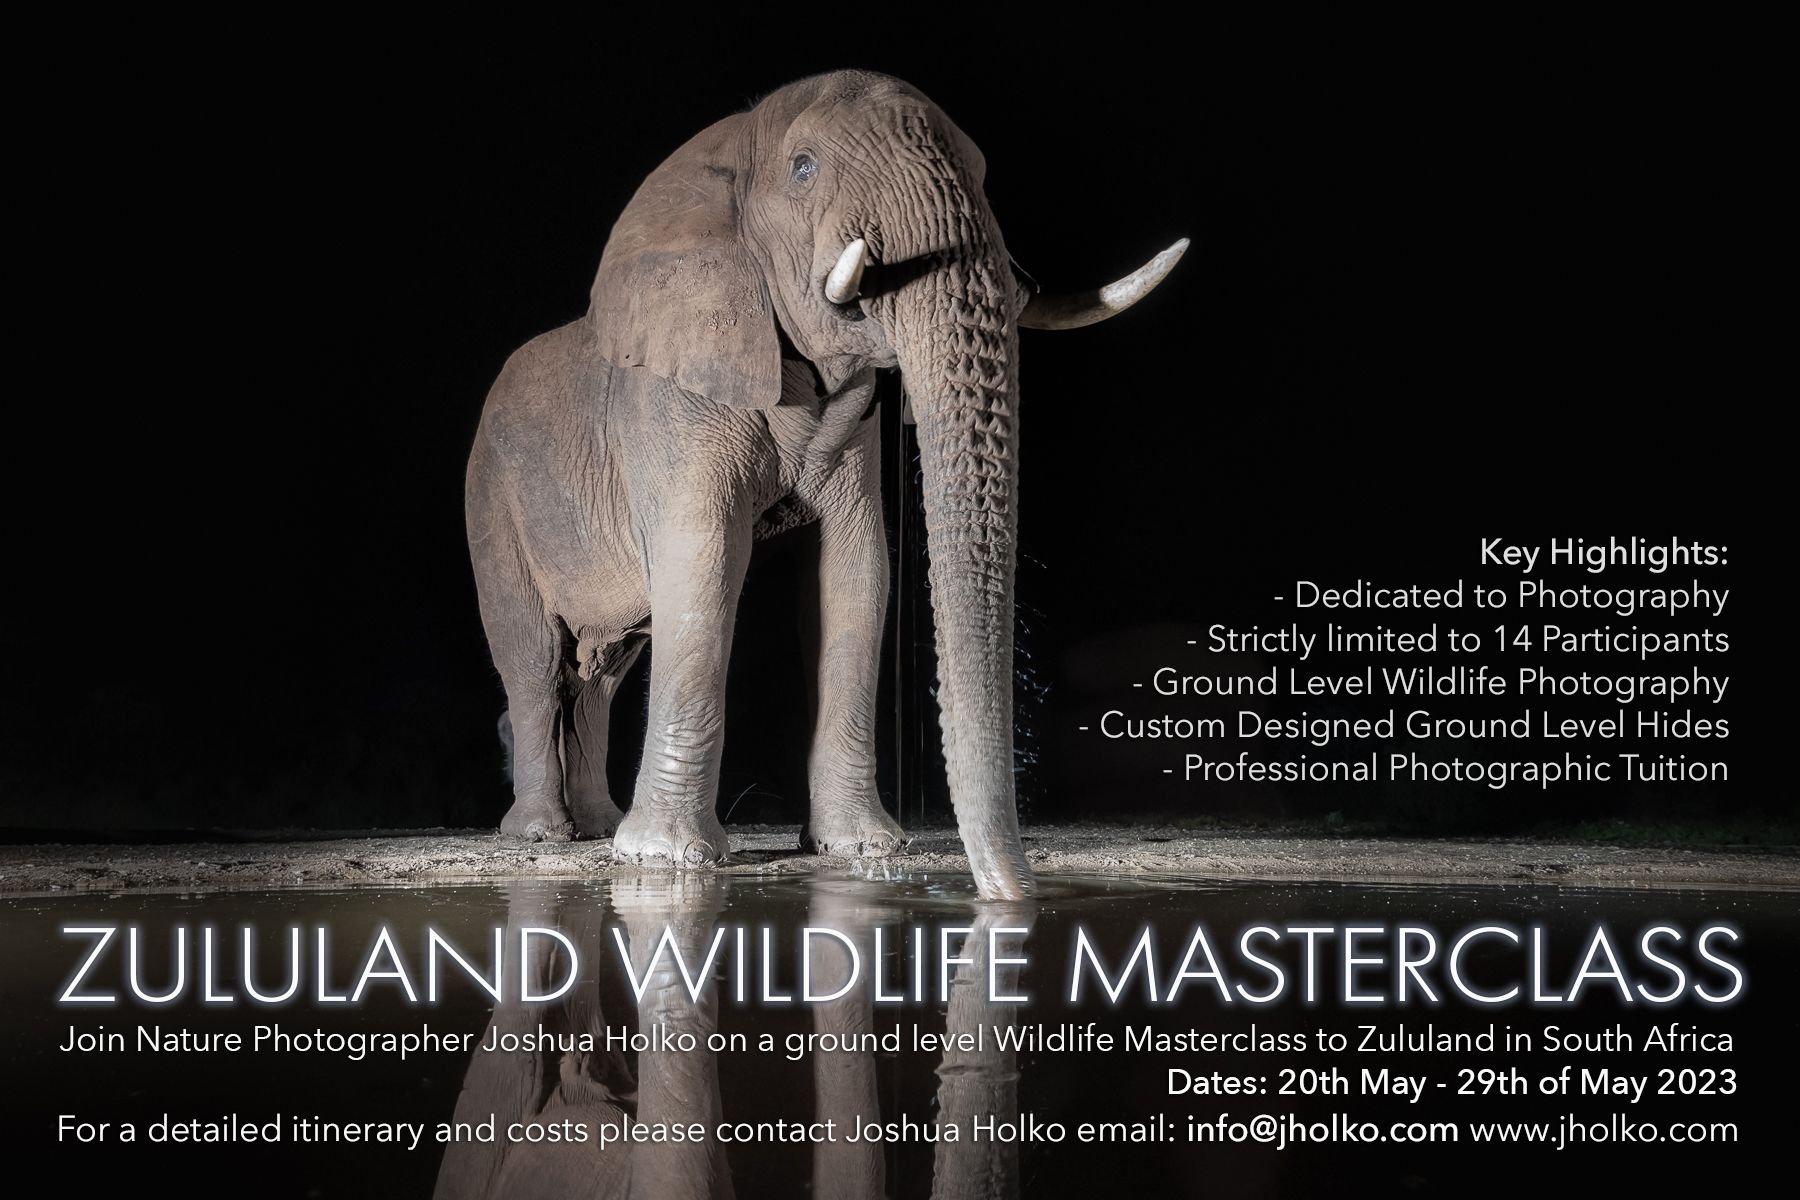 Zululand Wildlife Masterclass